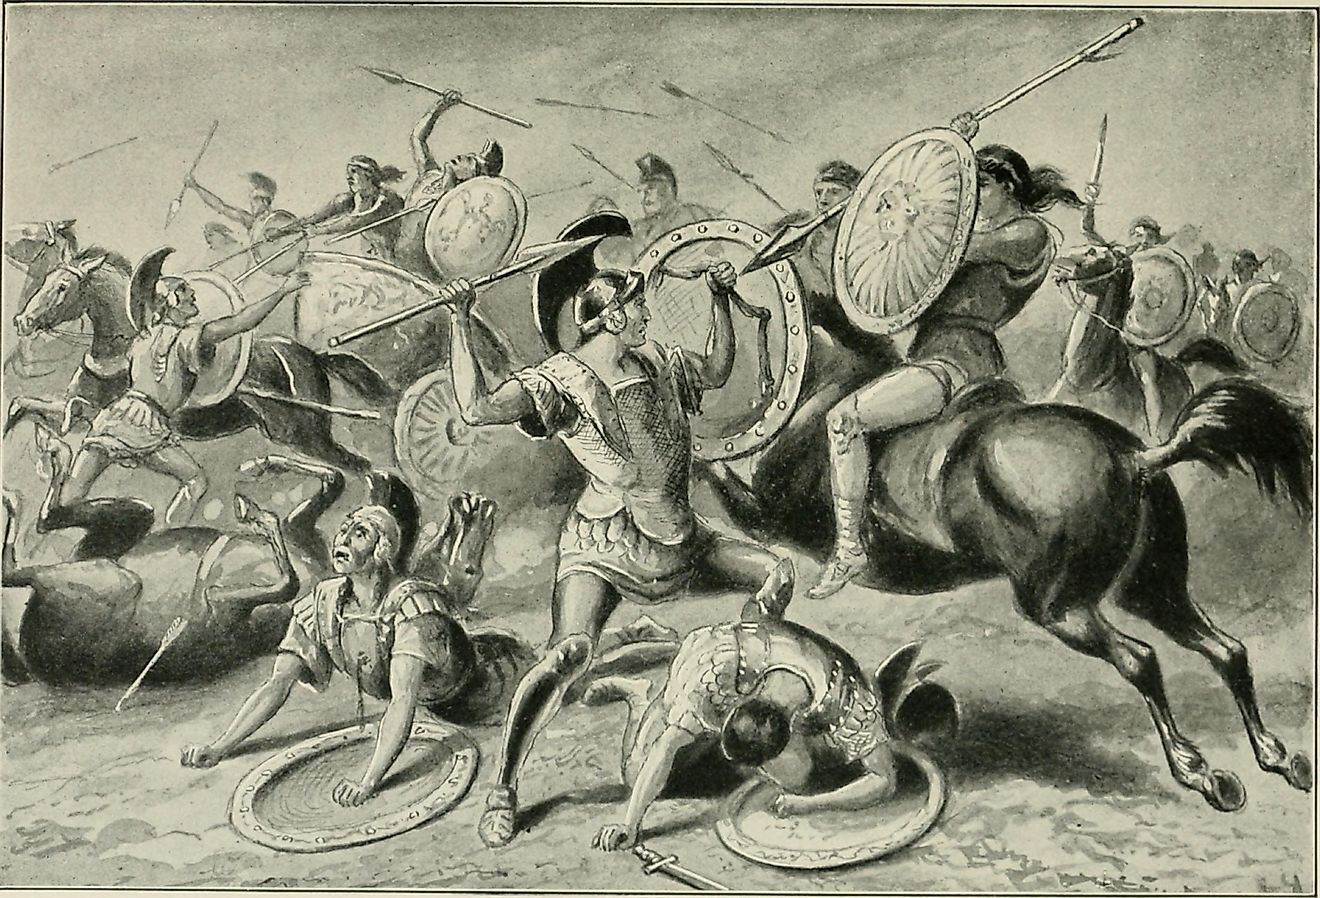 Pelopidas leading the Sacred Band Thebans into battle.